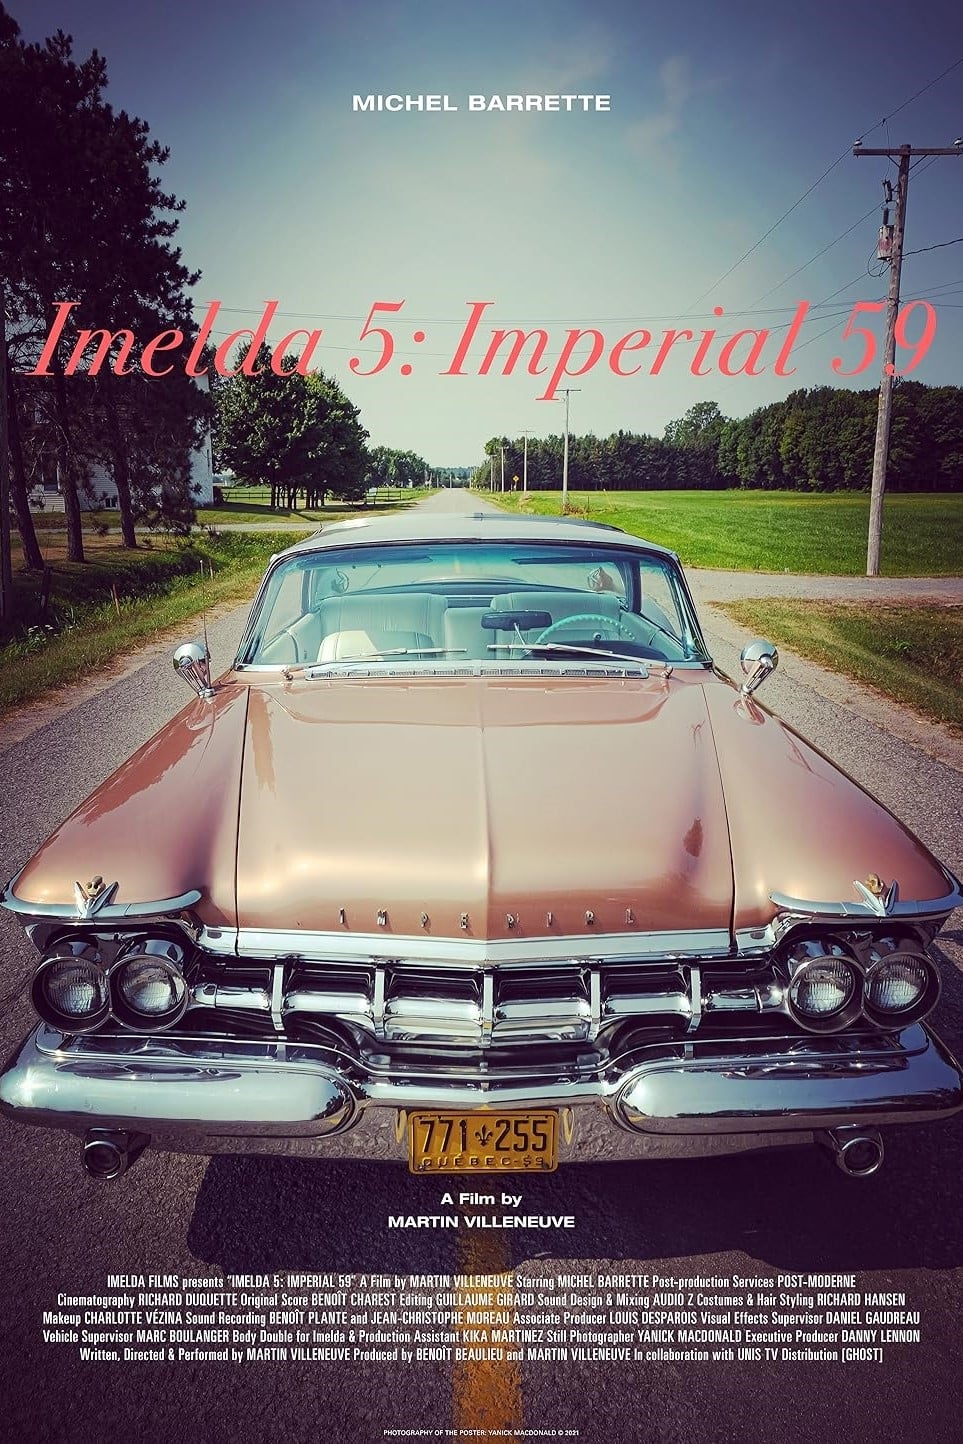 Imelda 5: Imperial 59